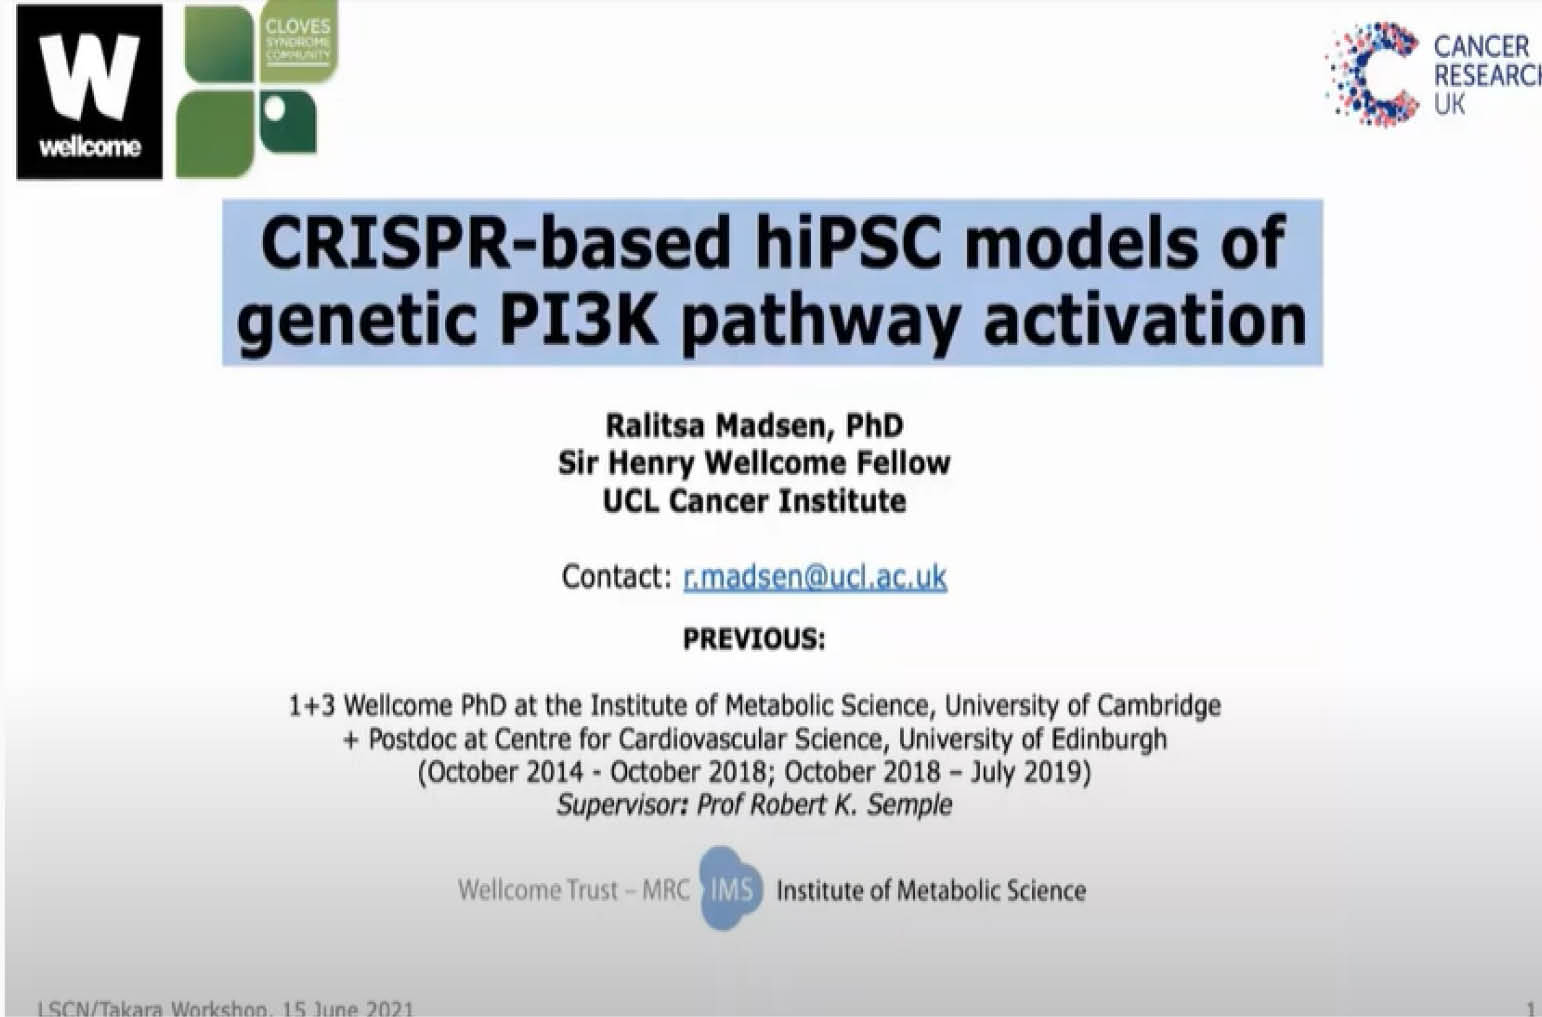 ON-DEMAND TAKARA BIO - LSCN WORKSHOP  Simplifying hiPSC-based disease modeling